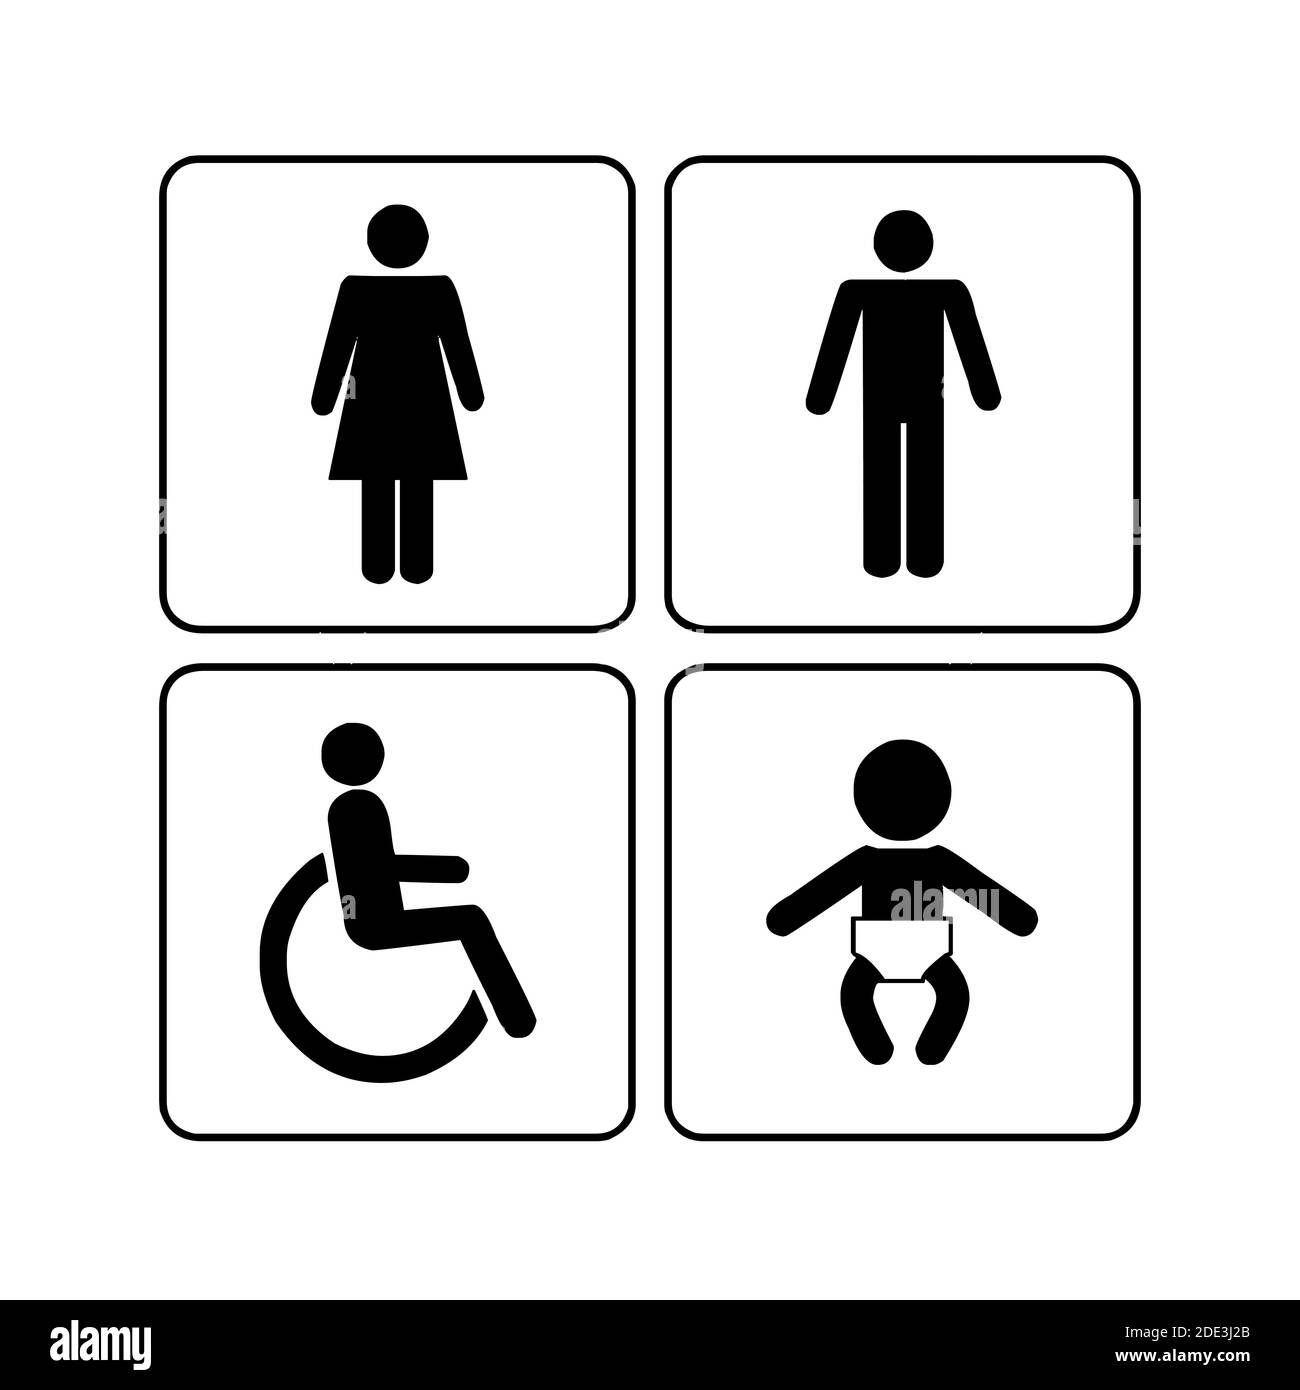 Toilet and restroom symbol pictogram Stock Photo